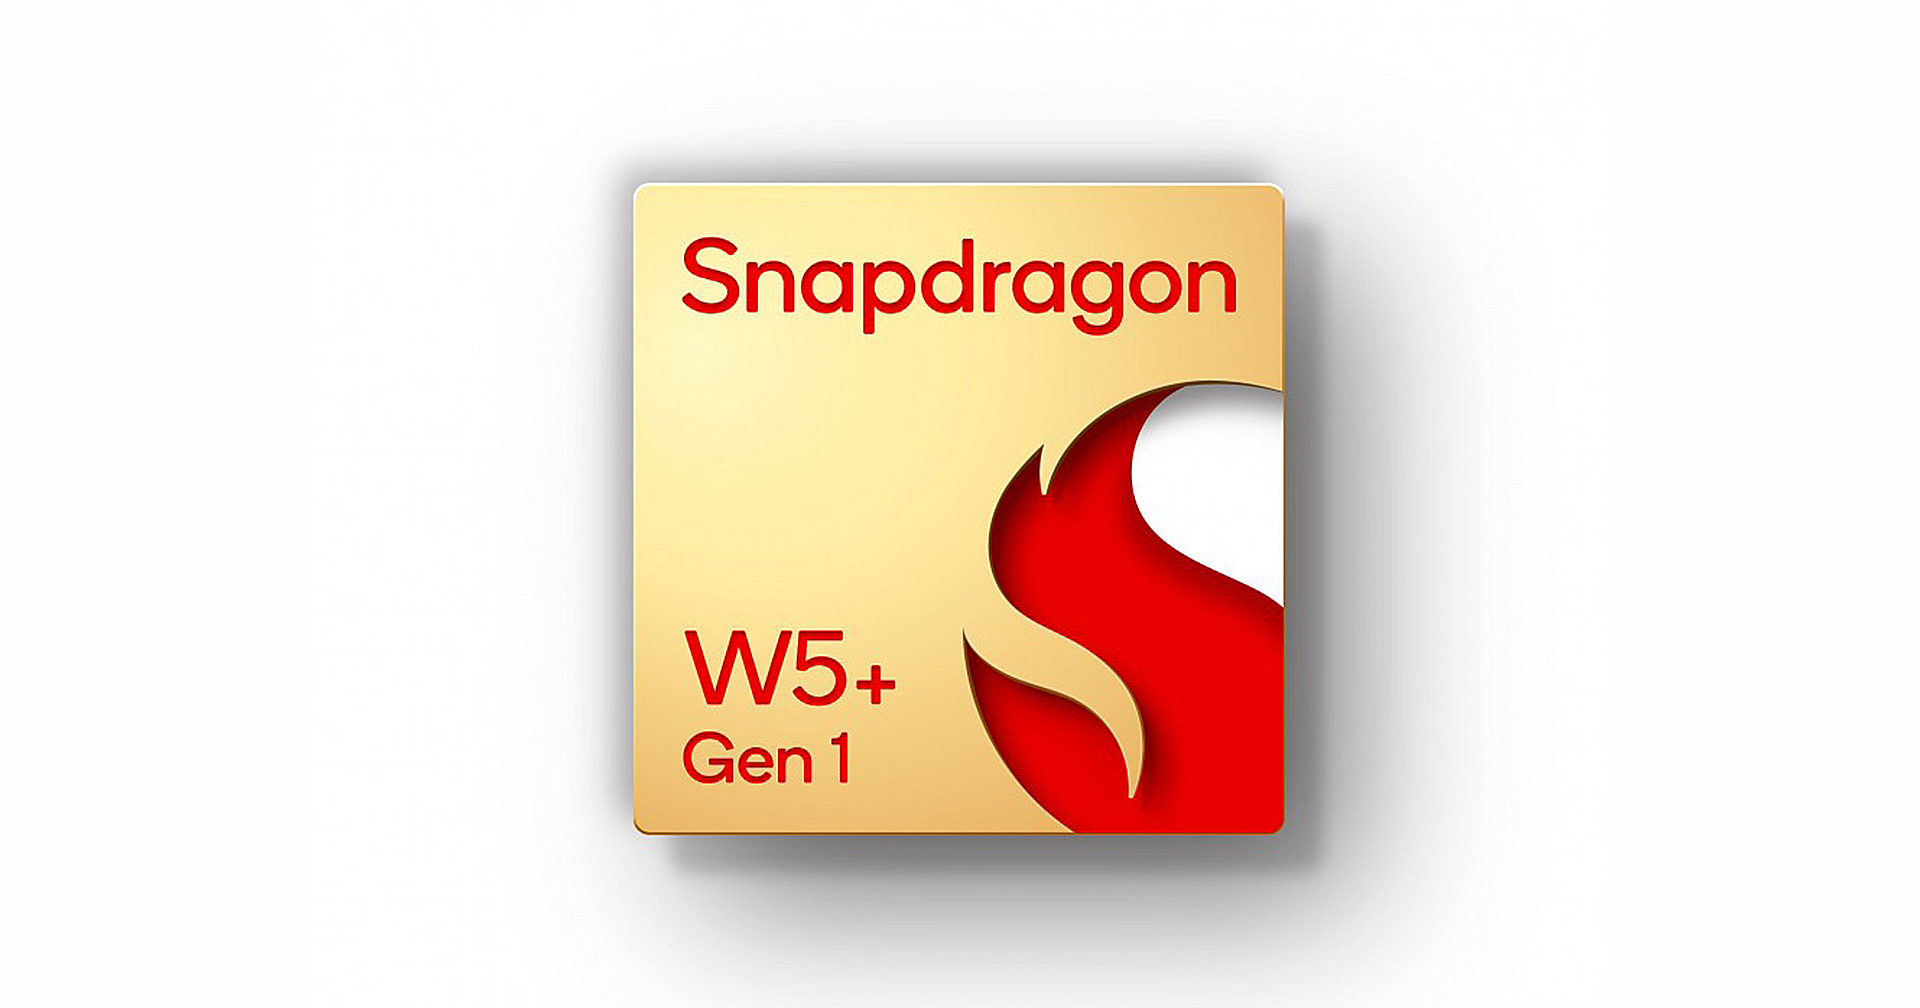 Qualcomm เปิดตัวชิป Snapdragon W5 Gen 1 และ W5+ Gen 1  ระดับ 4 นาโนเมตร สำหรับอุปกรณ์สวมใส่